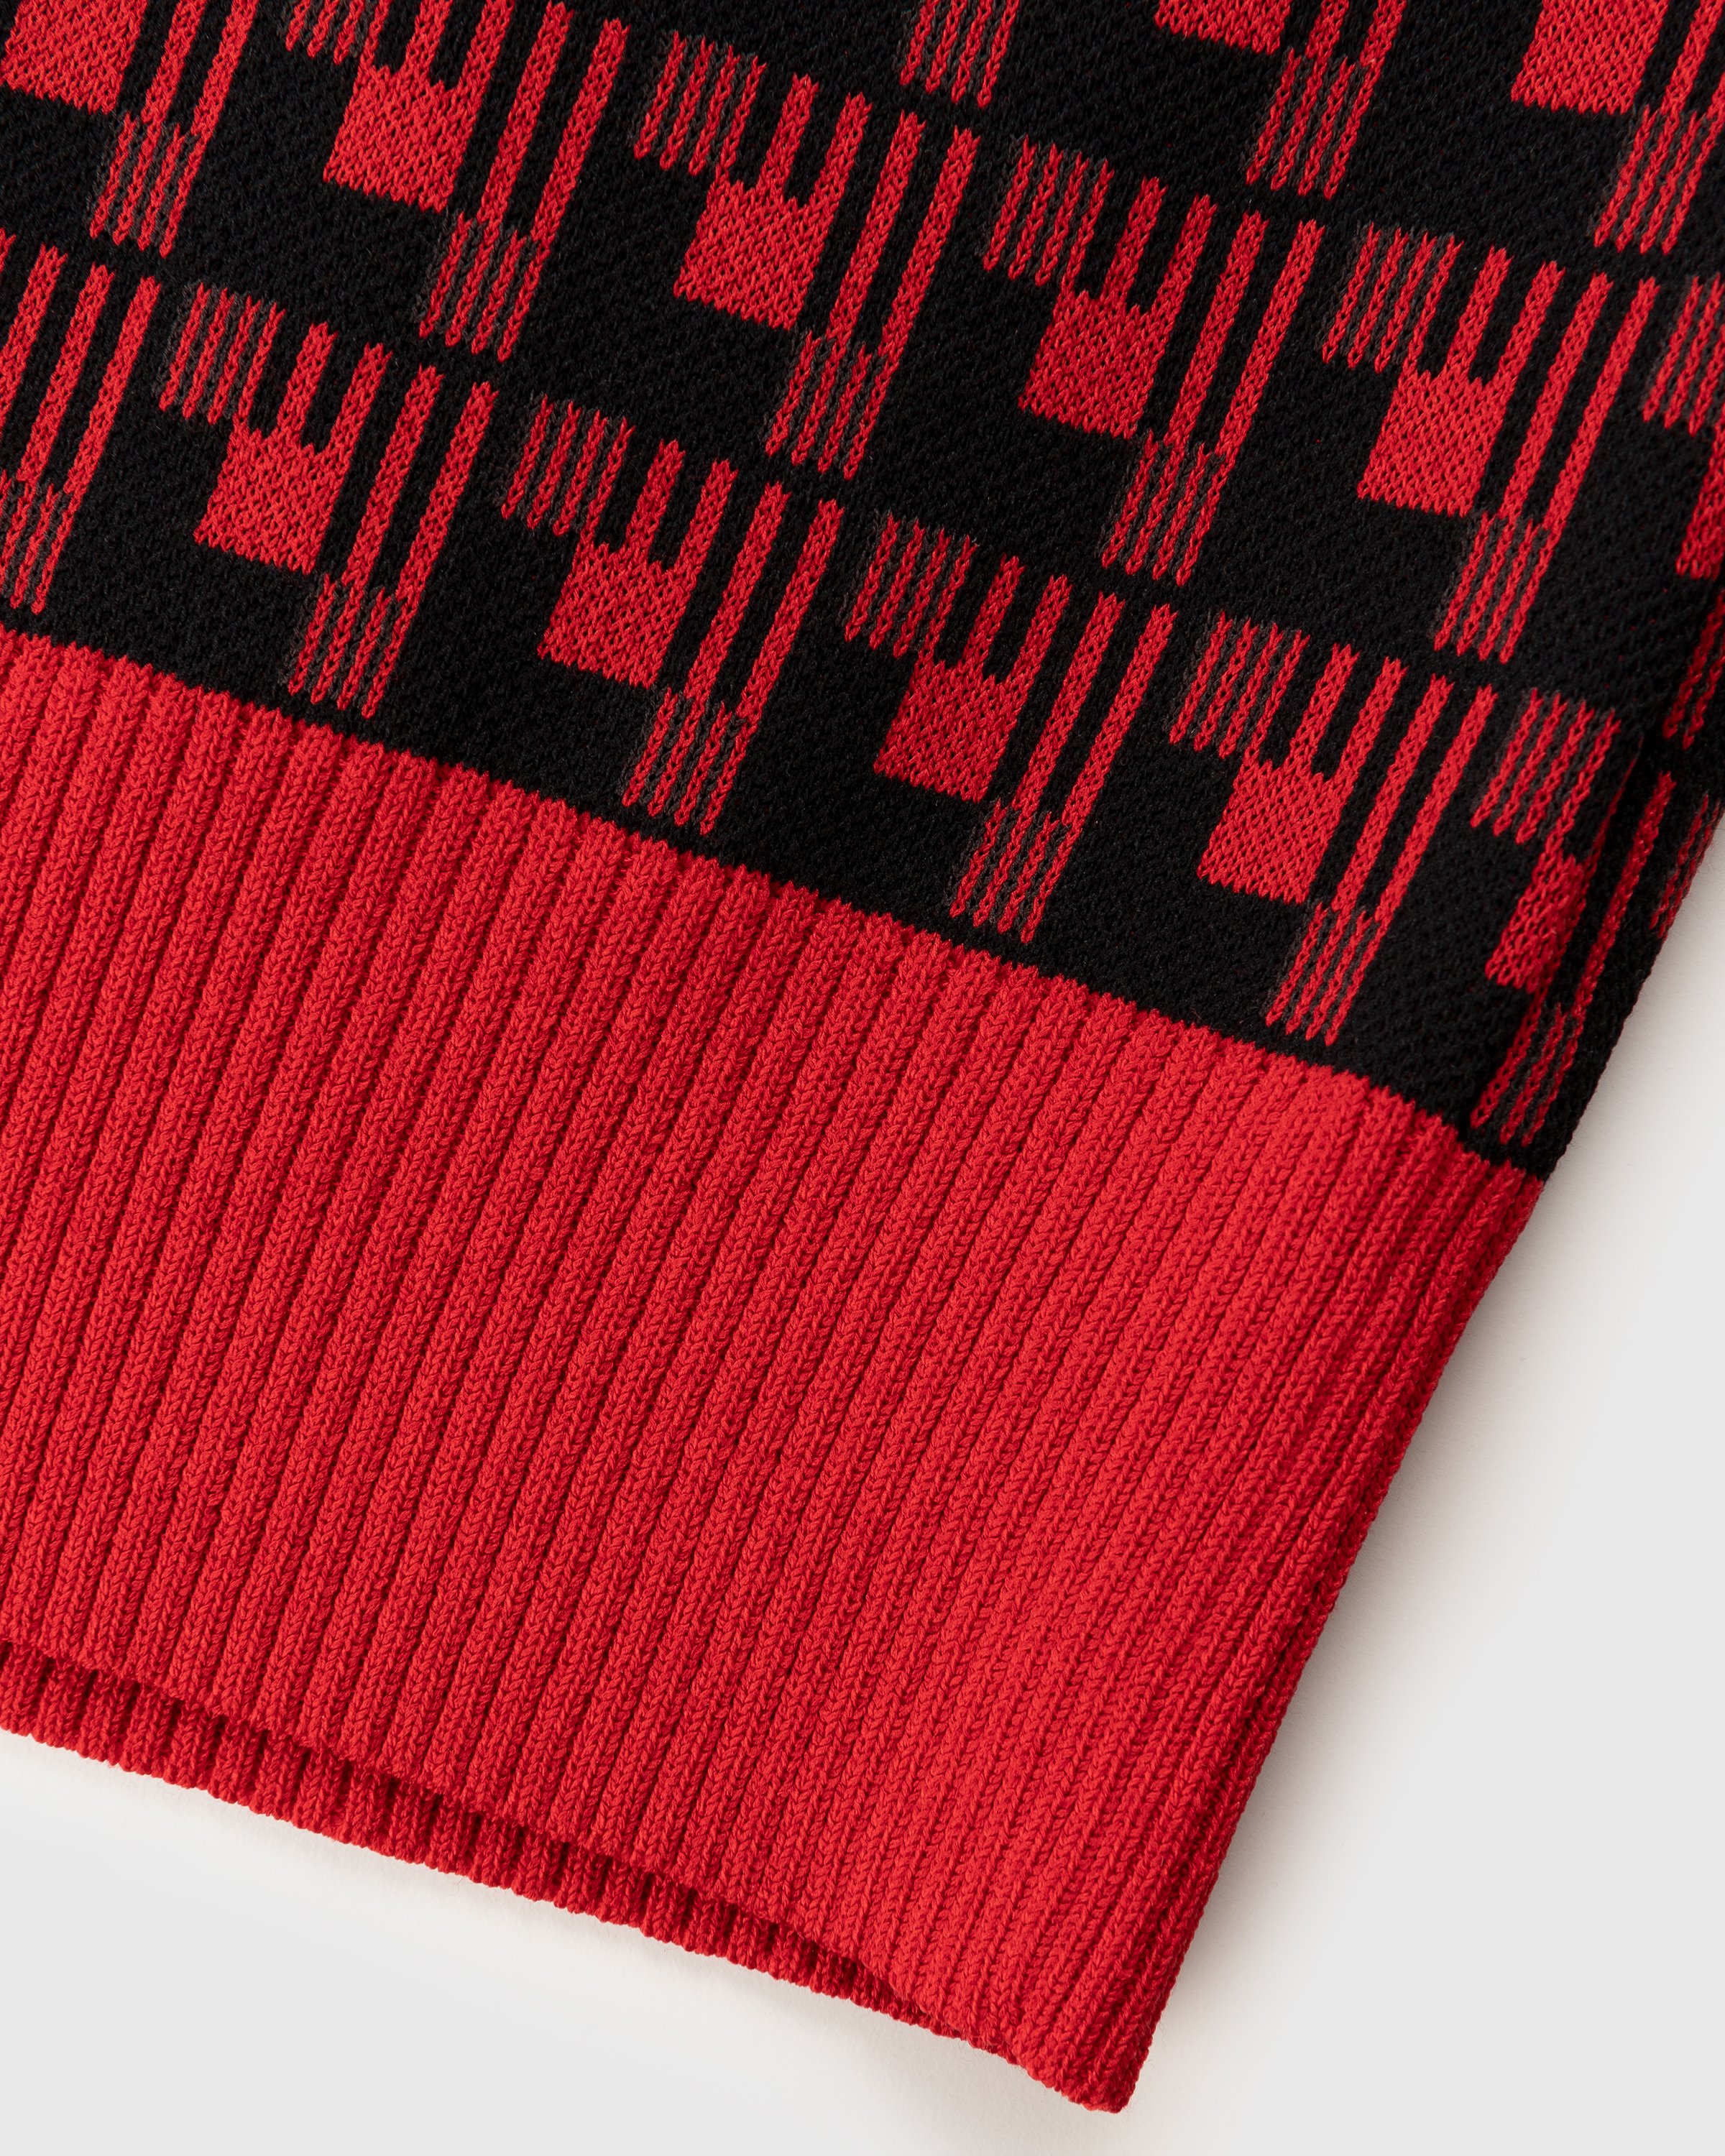 Adidas x Wales Bonner - WB Knit Vest Scarlet/Black - Clothing - Red - Image 7